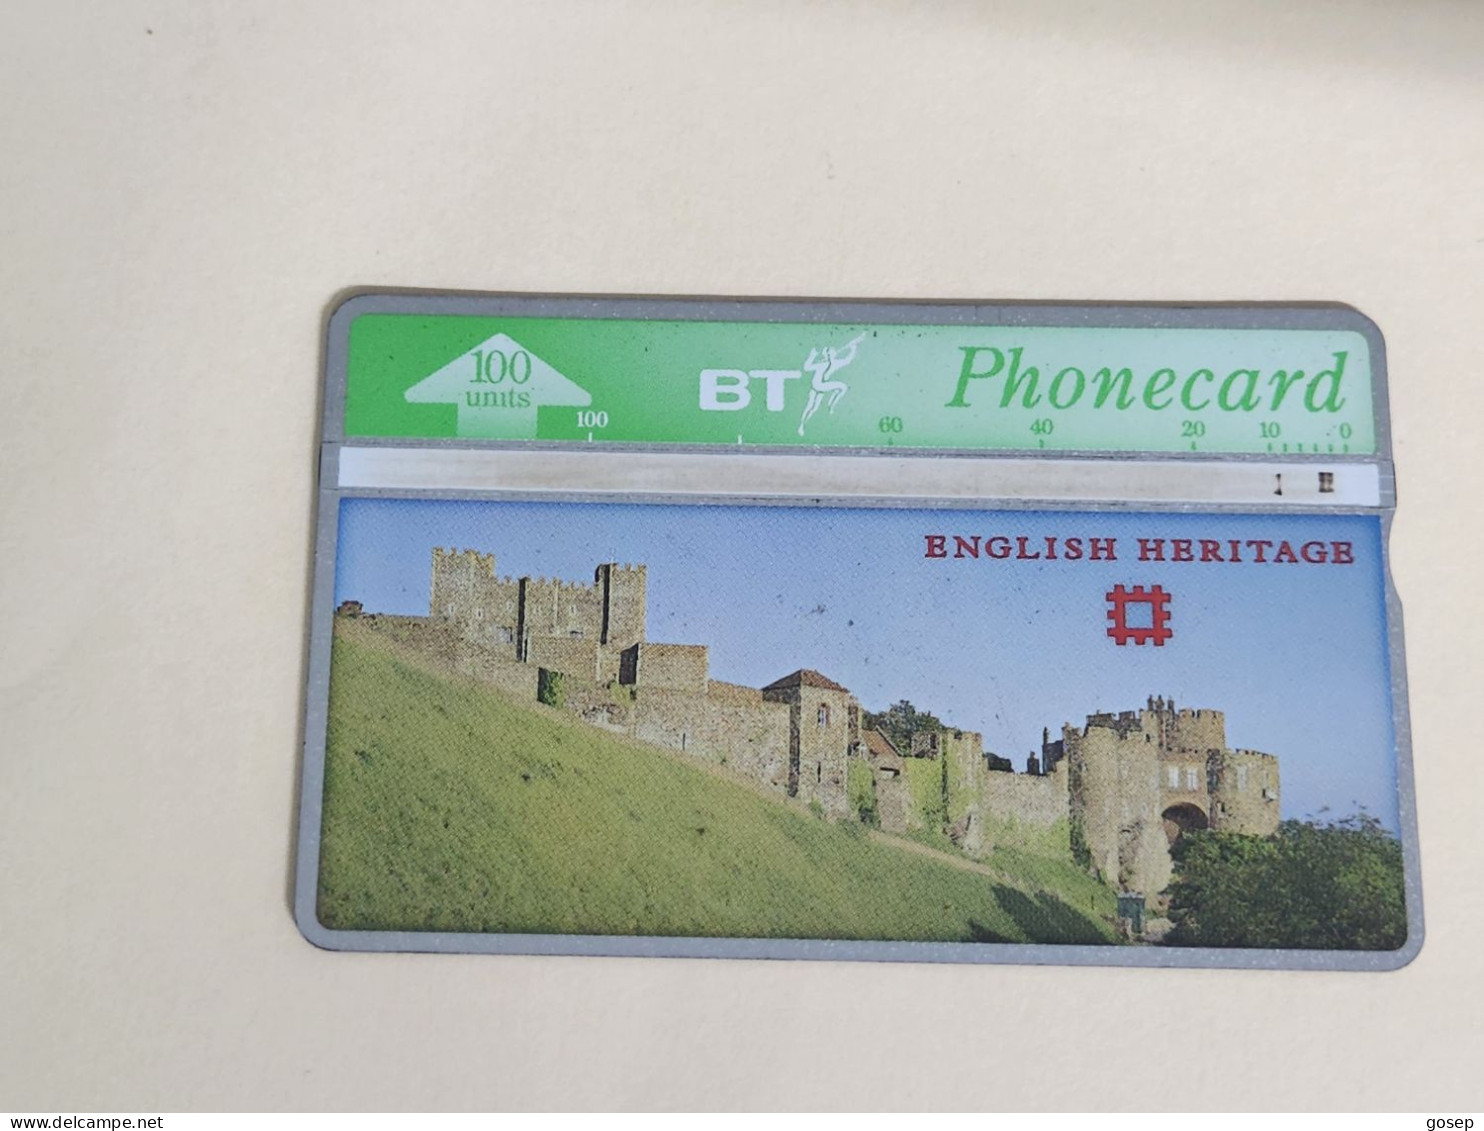 United Kingdom-(BTA116)HERITAGE-Dover Castle-(200)(100units)(527G37924)price Cataloge3.00£-used+1card Prepiad Free - BT Advertising Issues